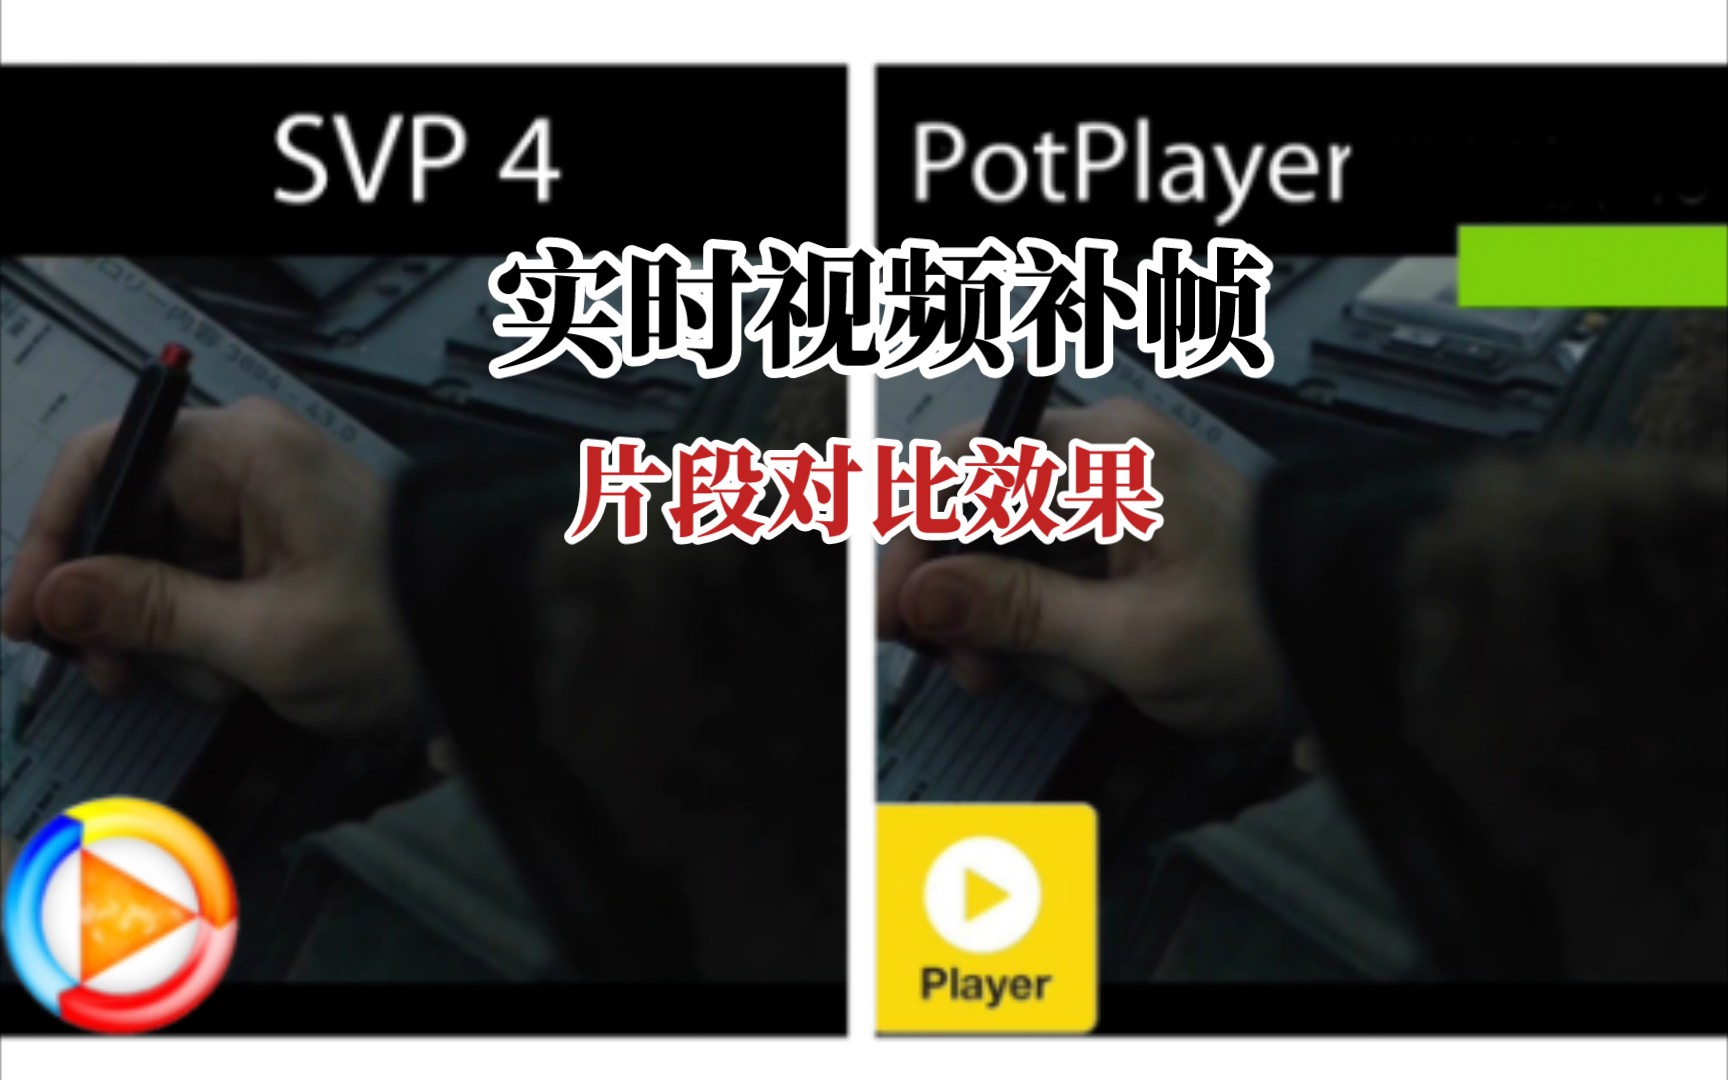 【SVP4】实时视频补帧 PotPlayer 好兄弟